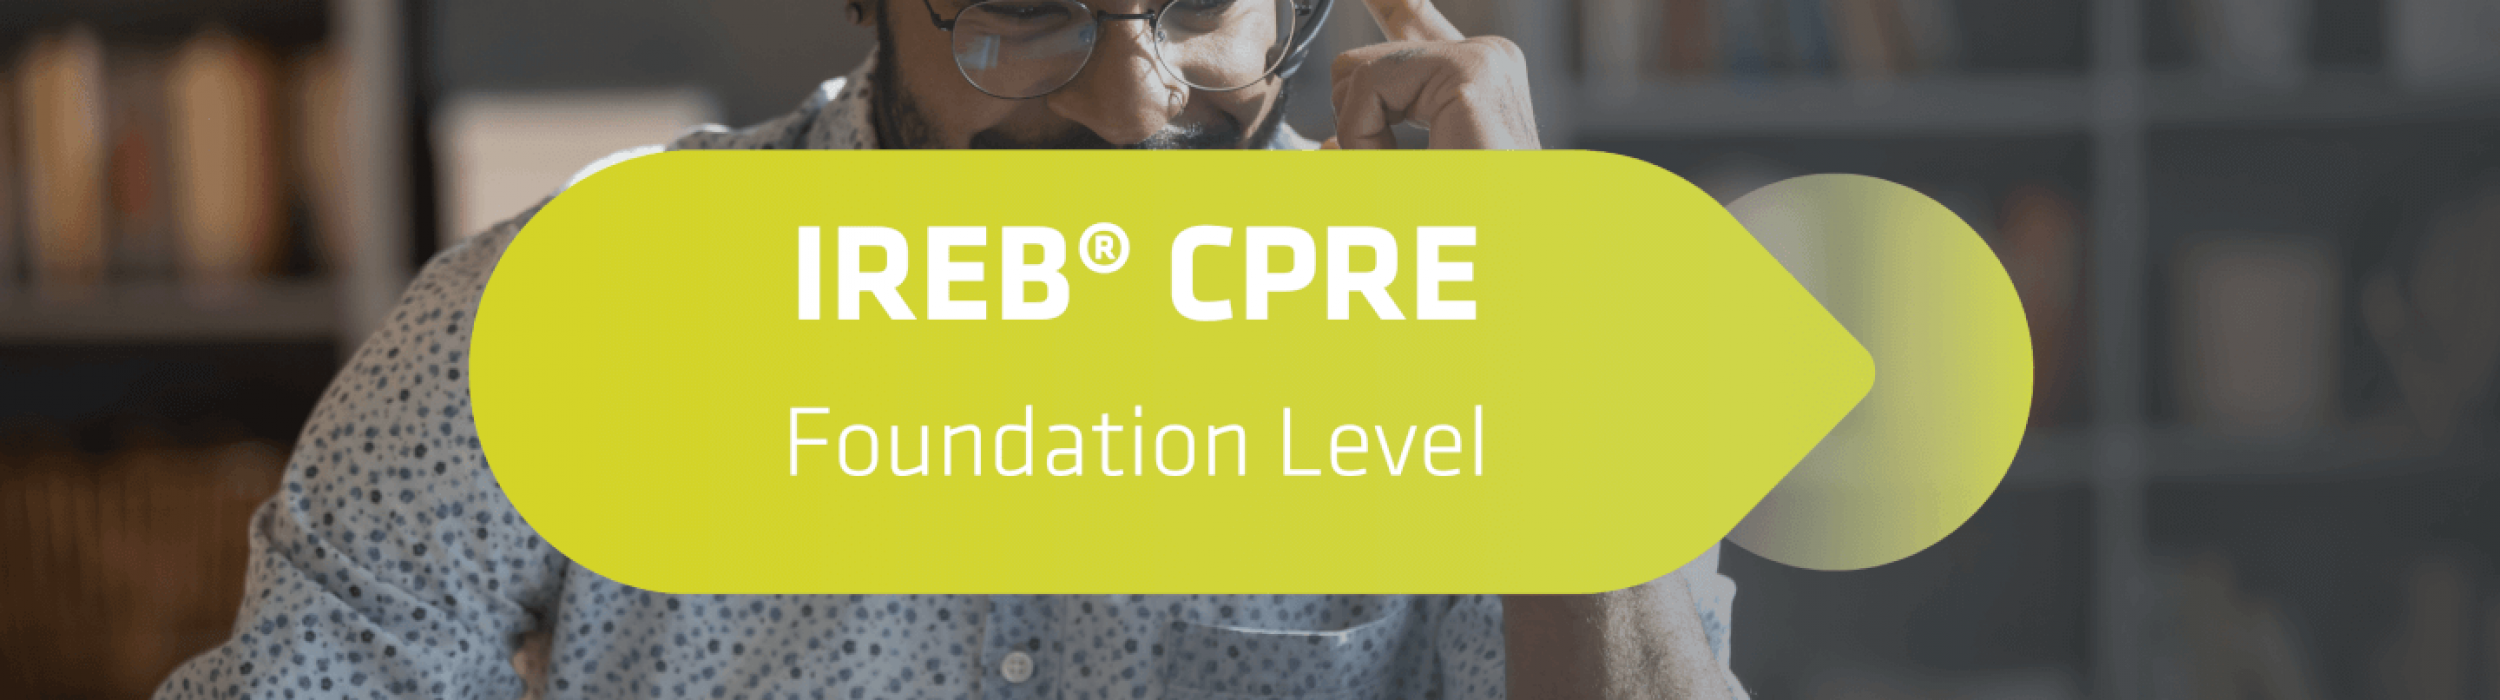 IREB CPRE Foundation Level